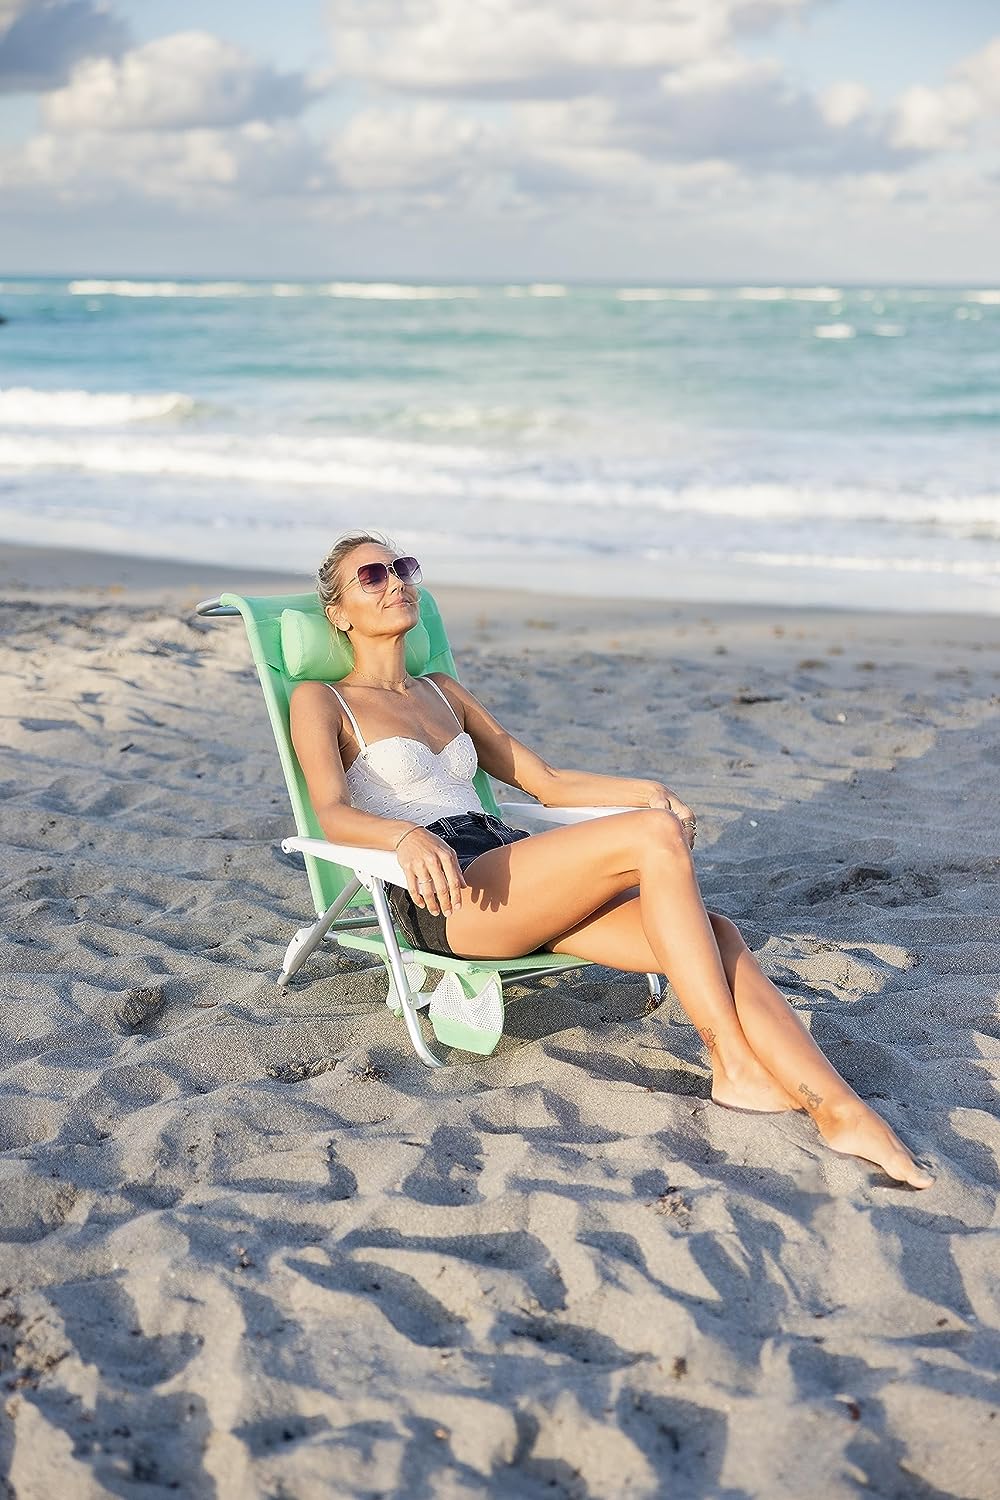 BUOY BEACH Lay Flat Beach Chair, Lightweight and Sturdy Design - Light Aqua